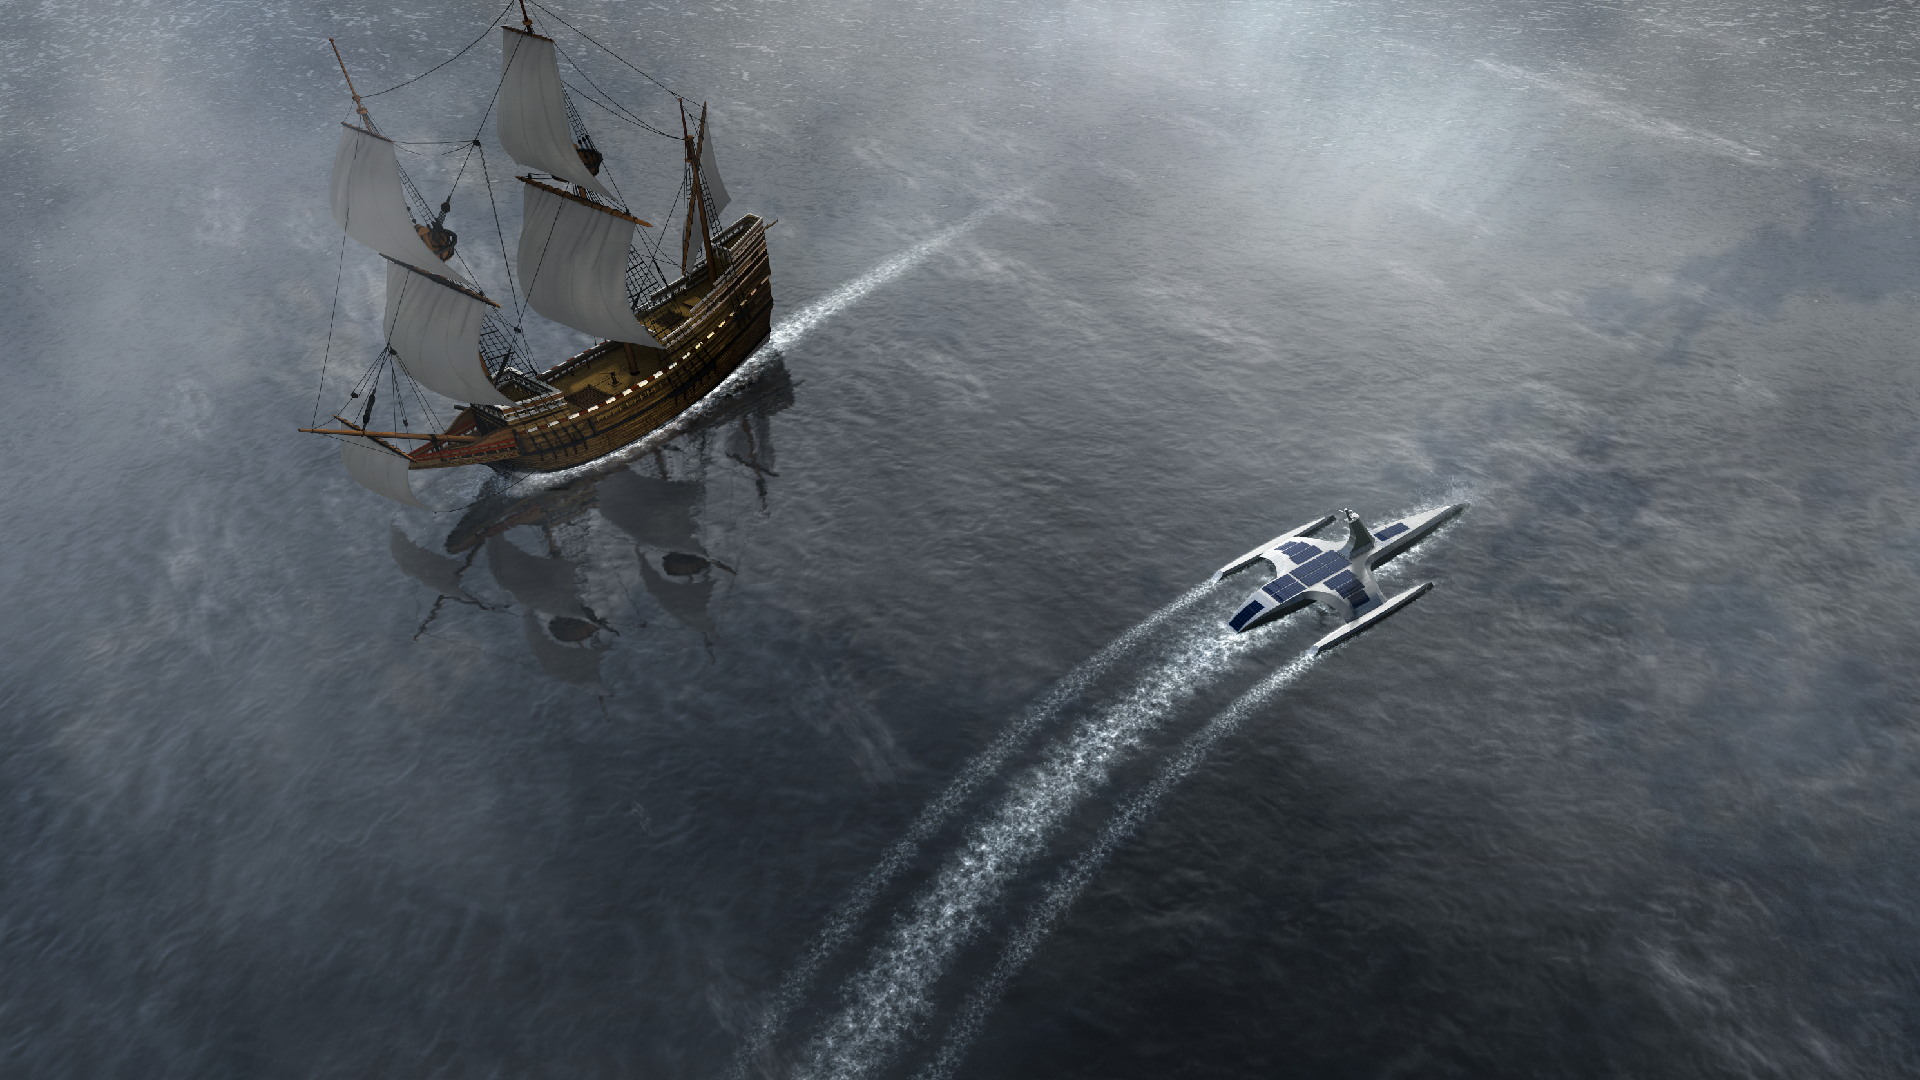 Ai Captain Self Sailing Crewless Ship To Recreate Mayflower Voyage Cgtn